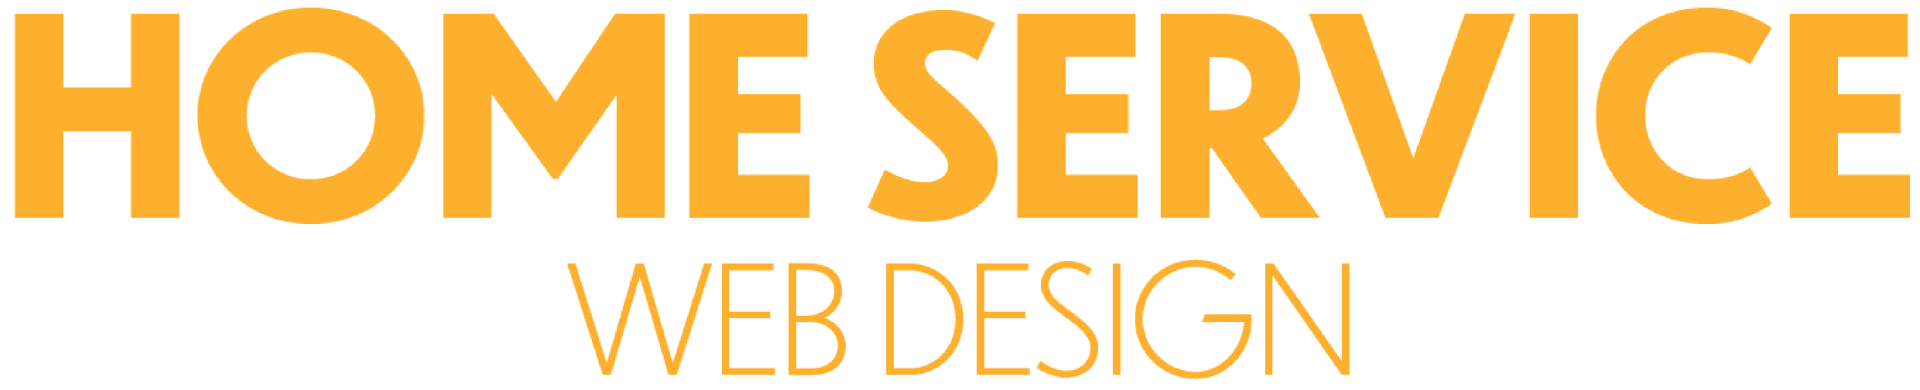 Home Services Web Design